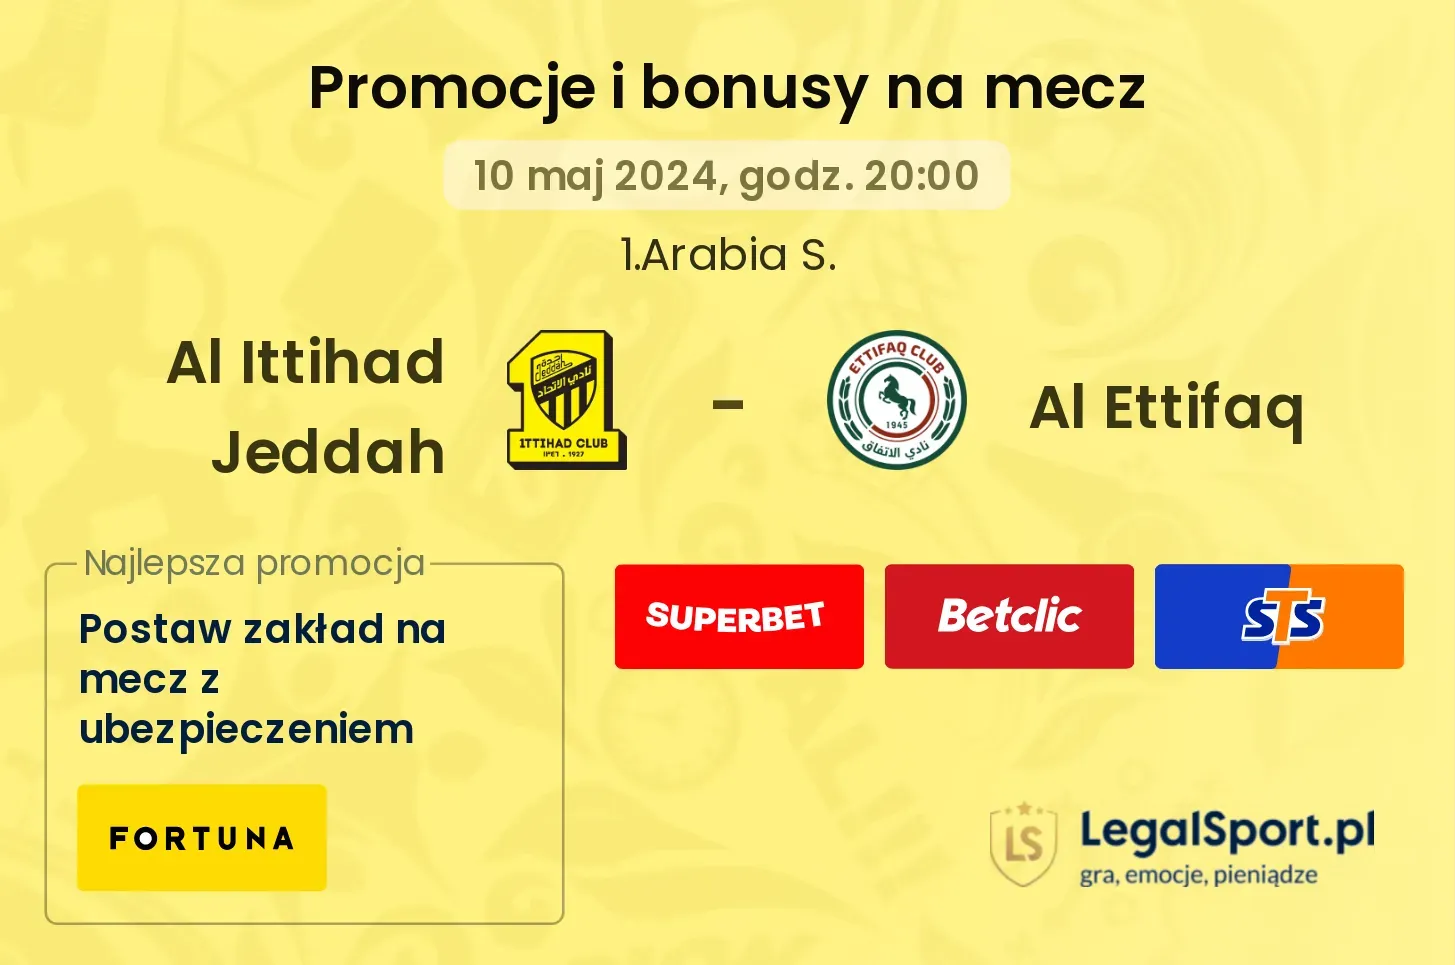 Al Ittihad Jeddah - Al Ettifaq promocje bonusy na mecz